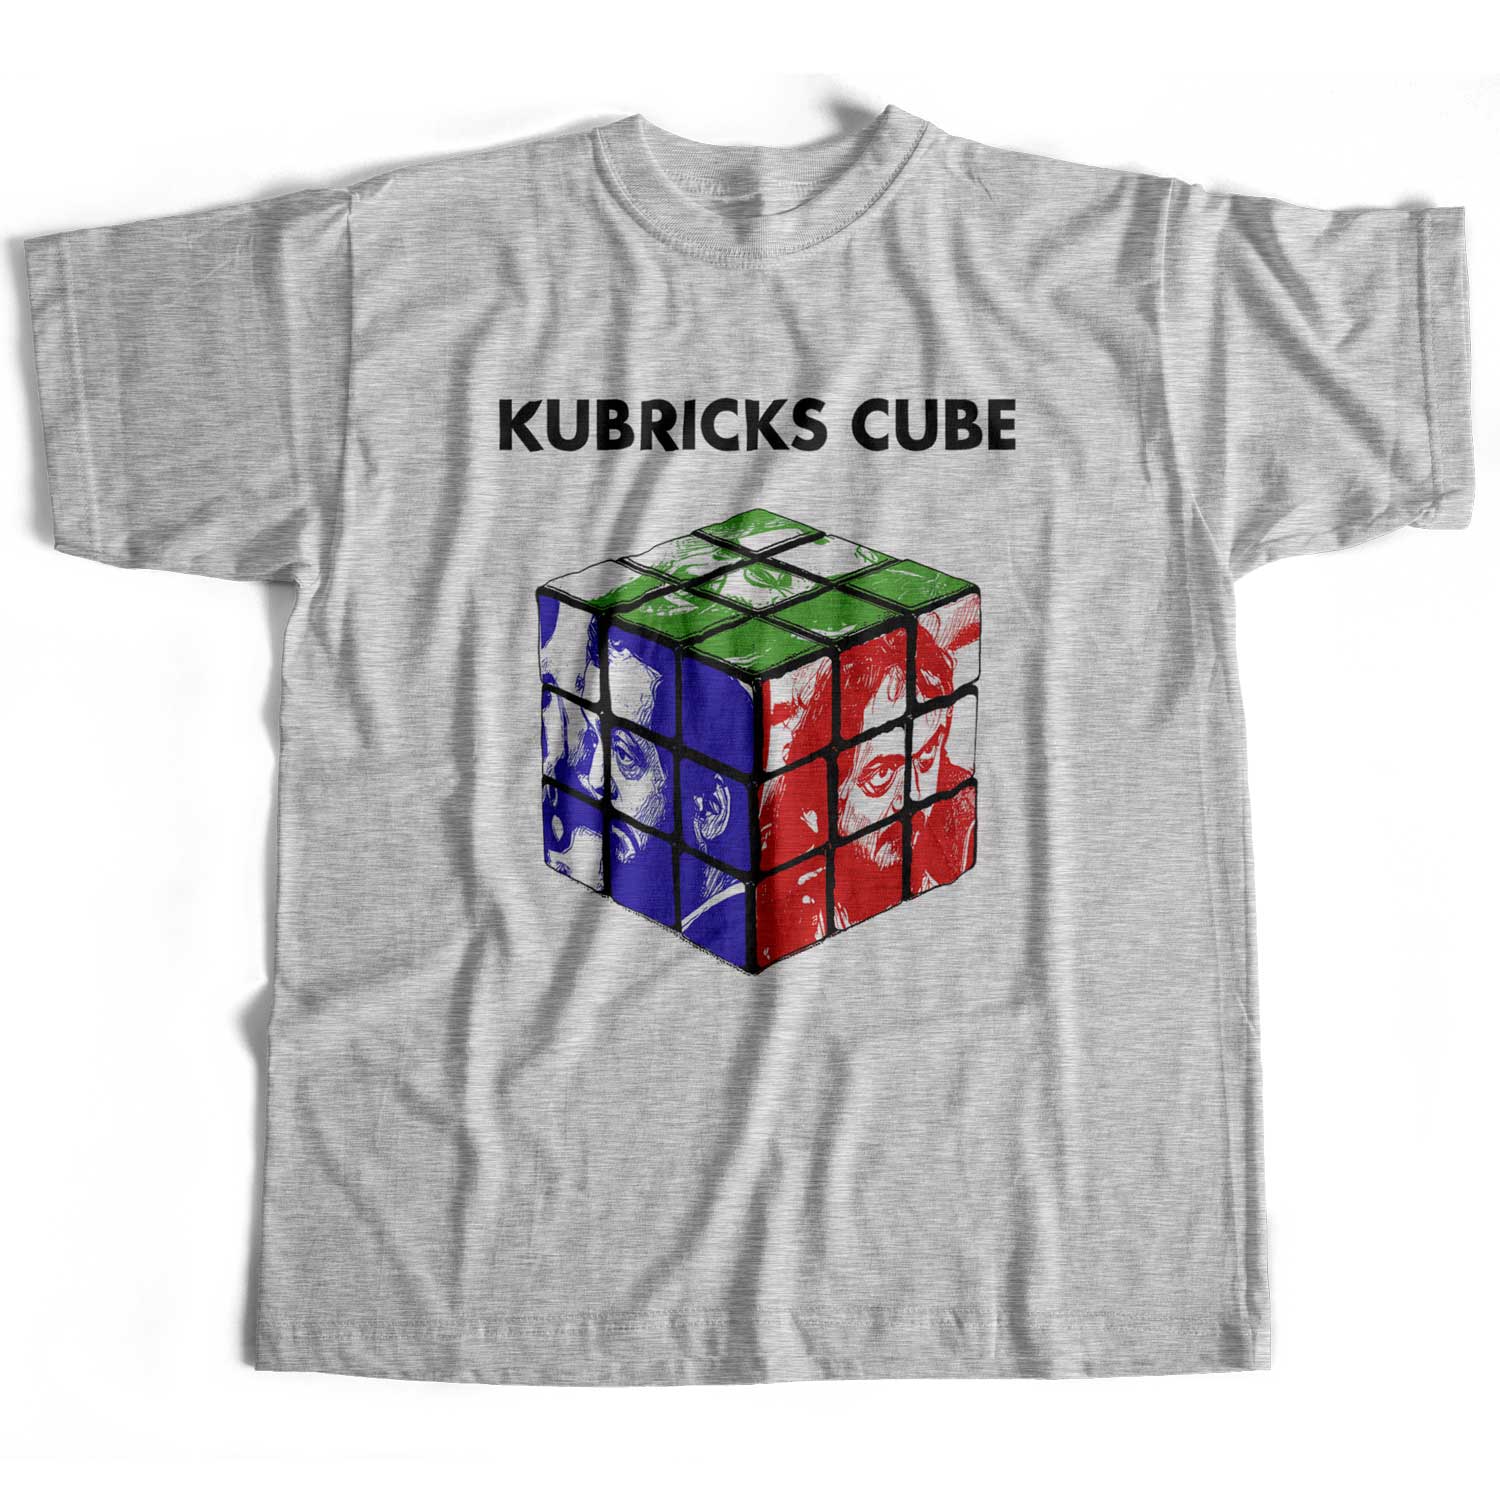 An Old Skool Hooligans Film Original Tribute To Stanley Kubrick T Shirt - Kubricks Cube